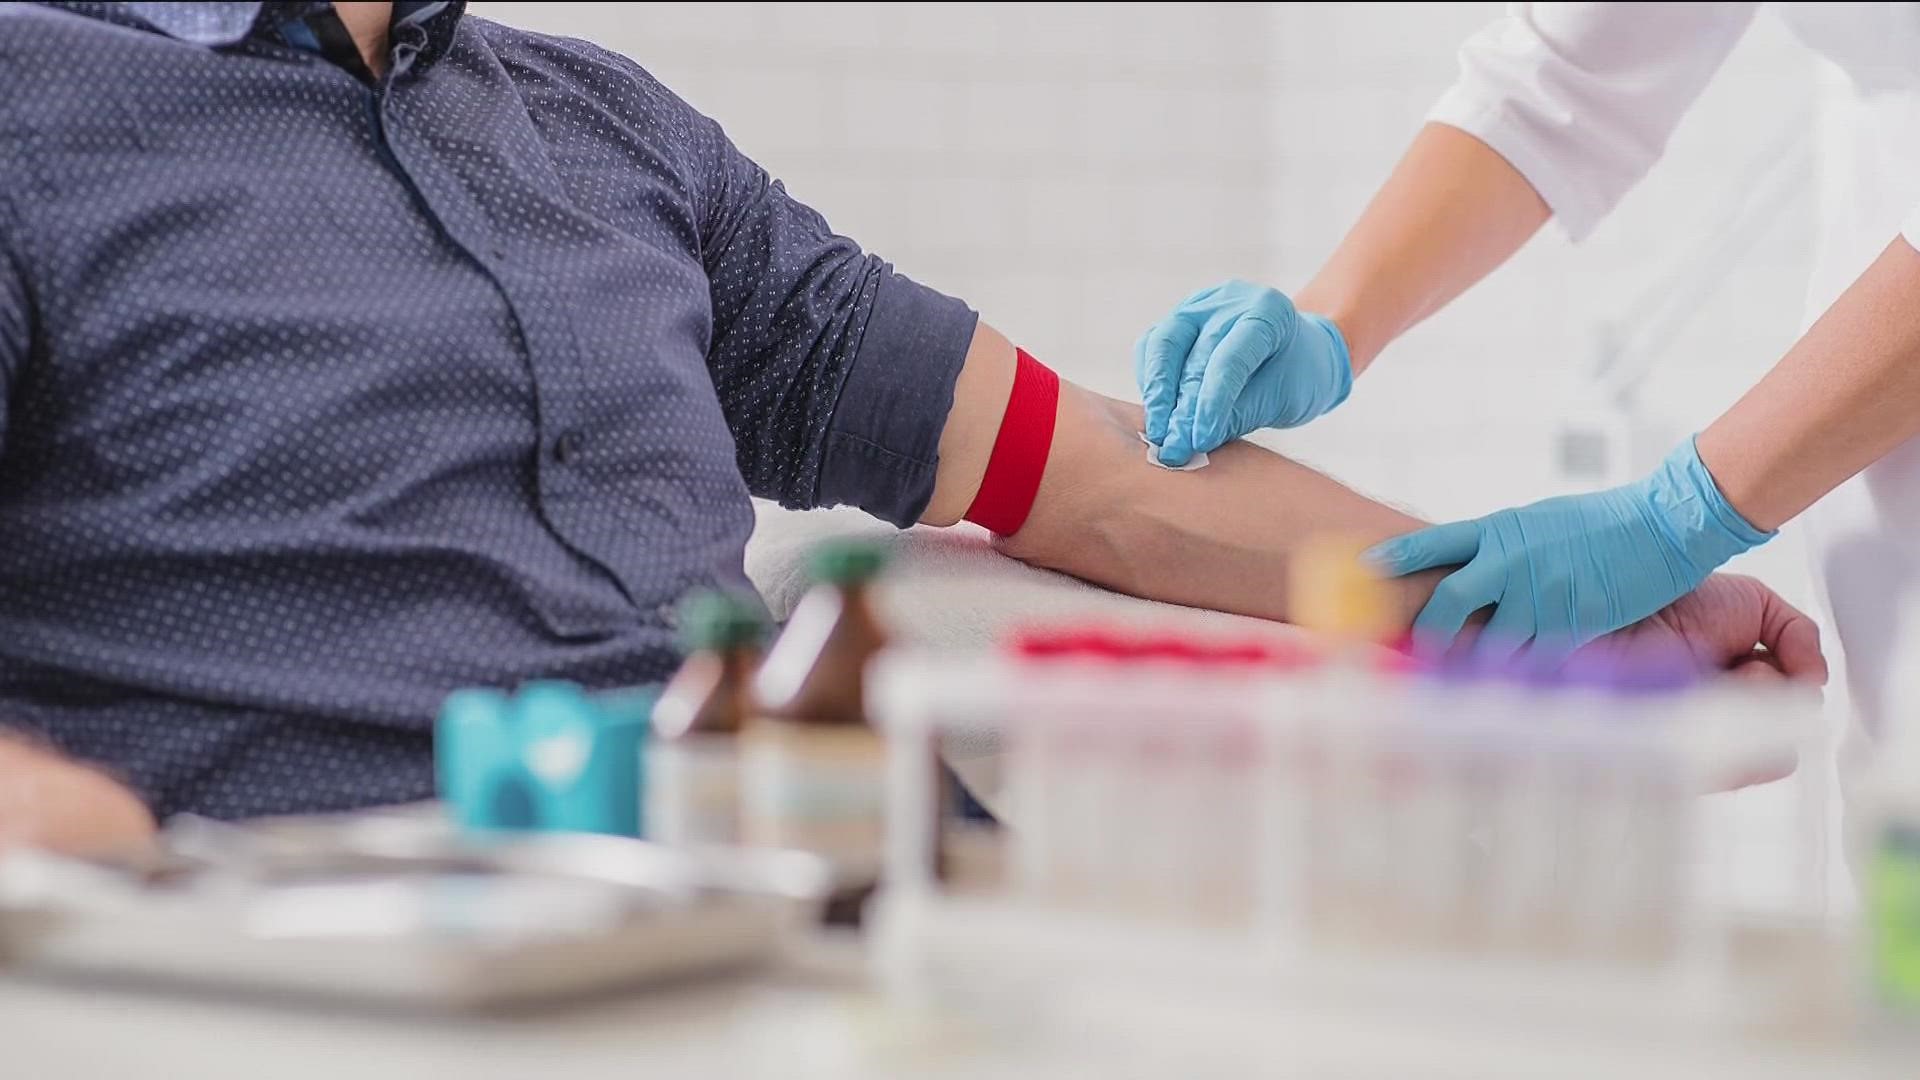 can gay men donate blood california